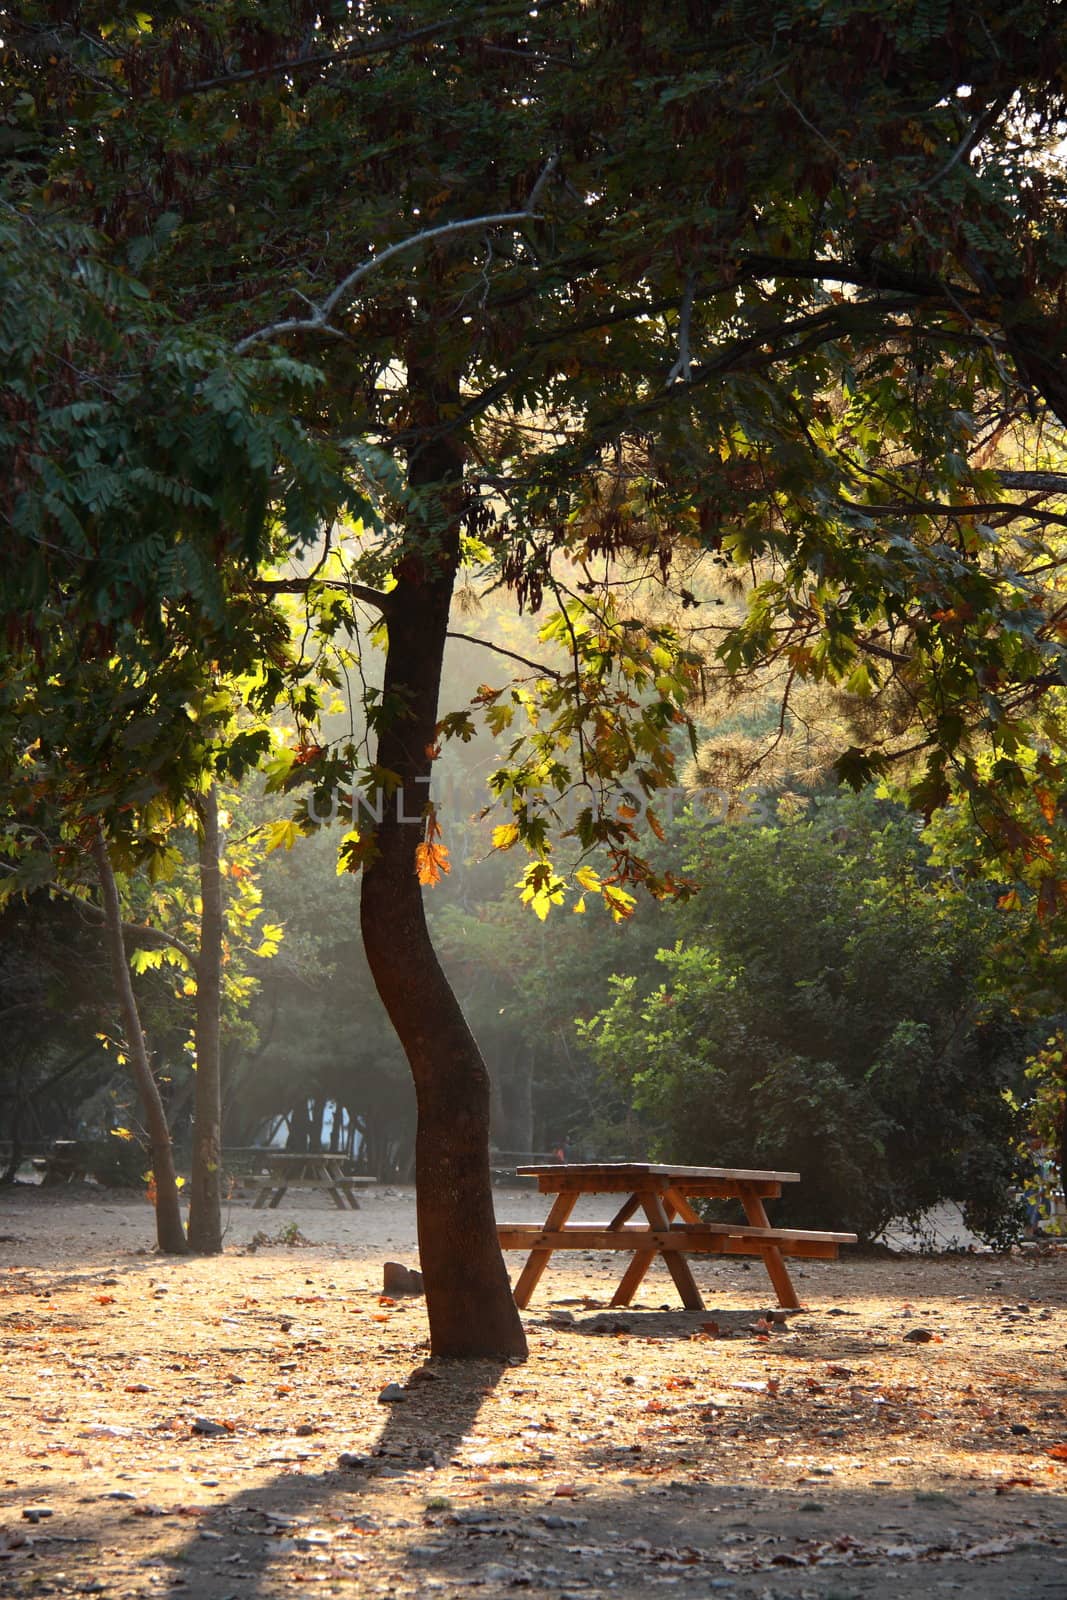 picnic on wood table under tree by mturhanlar